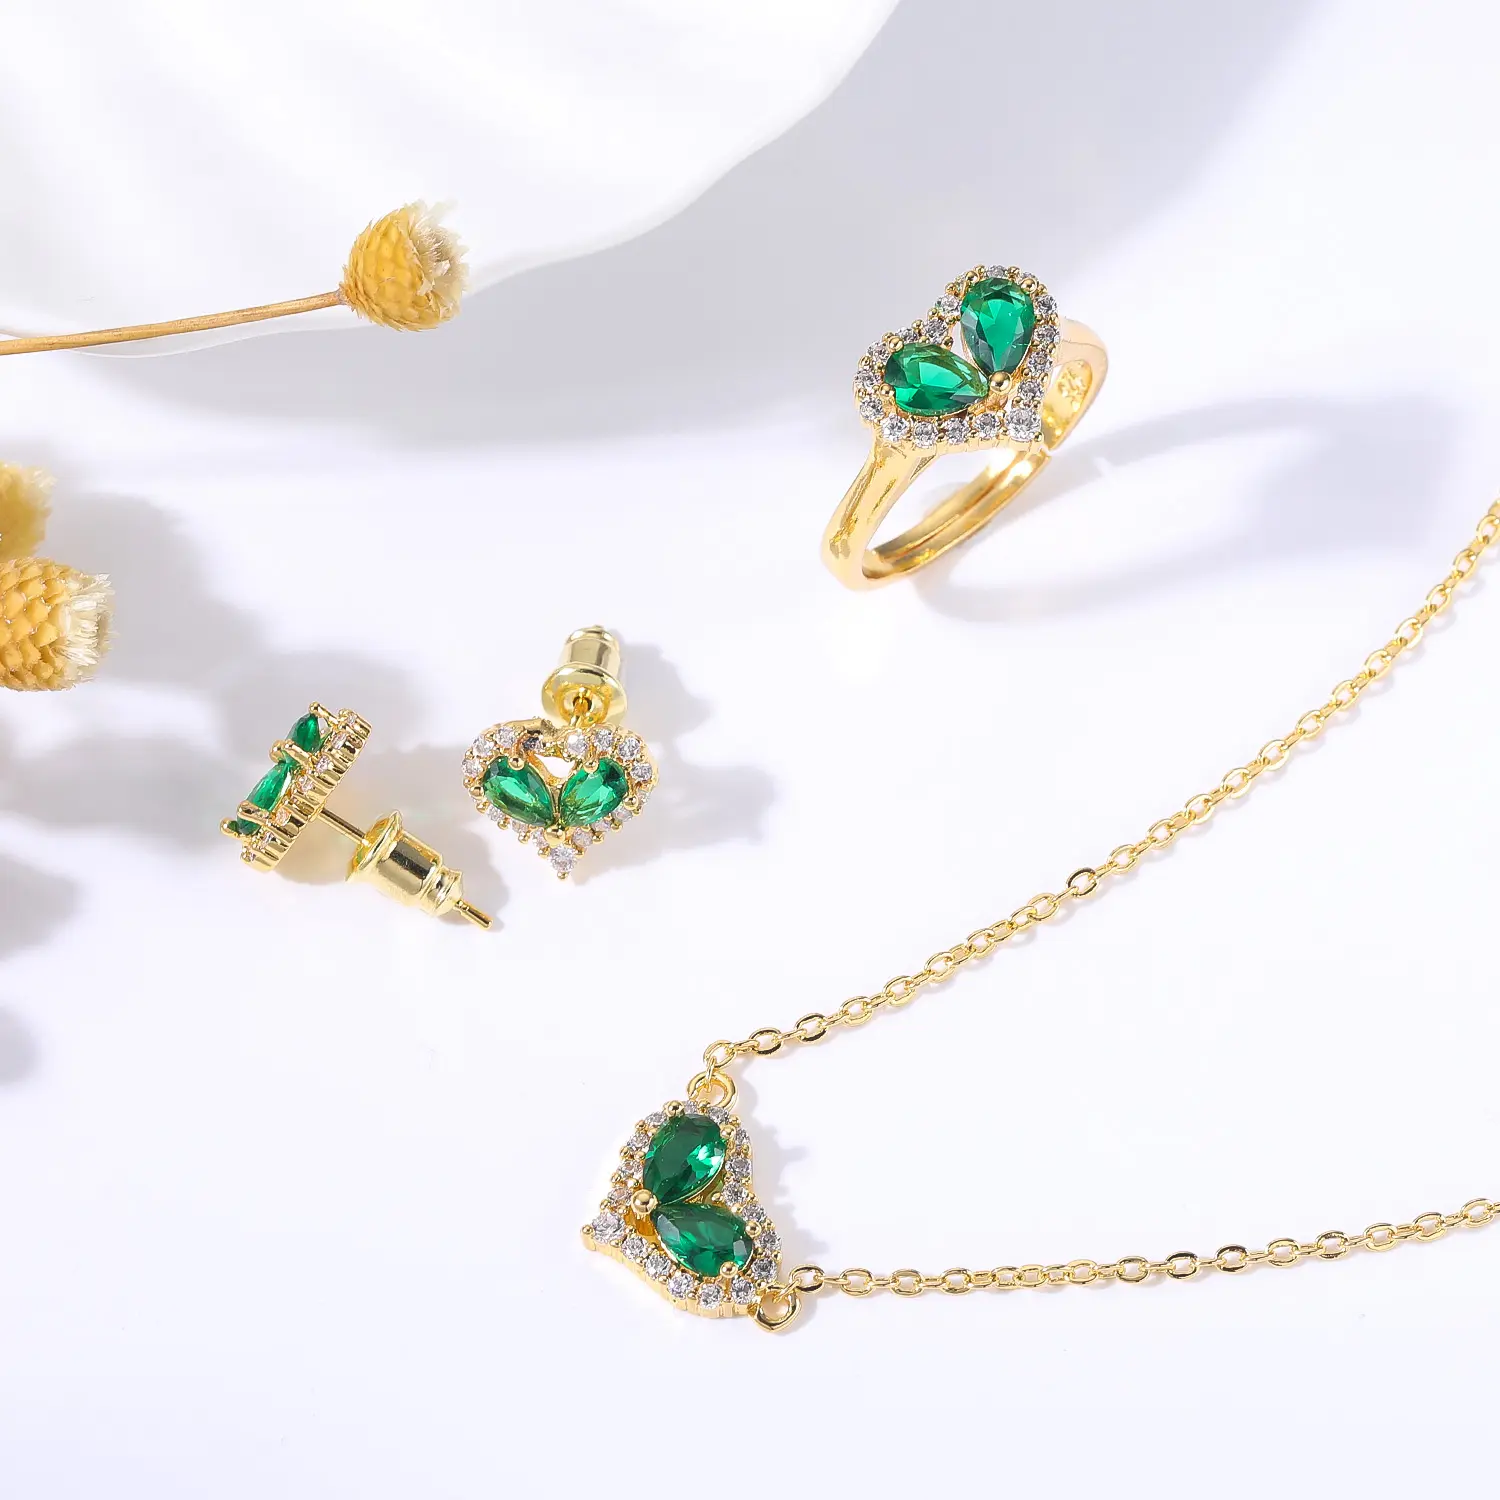 Dubai Bridal Pendant Chain Jewelry Necklace Fashion Wedding Accessories Jewelry Set AAA Cubic Zirconia Women Gift Gold Zircon